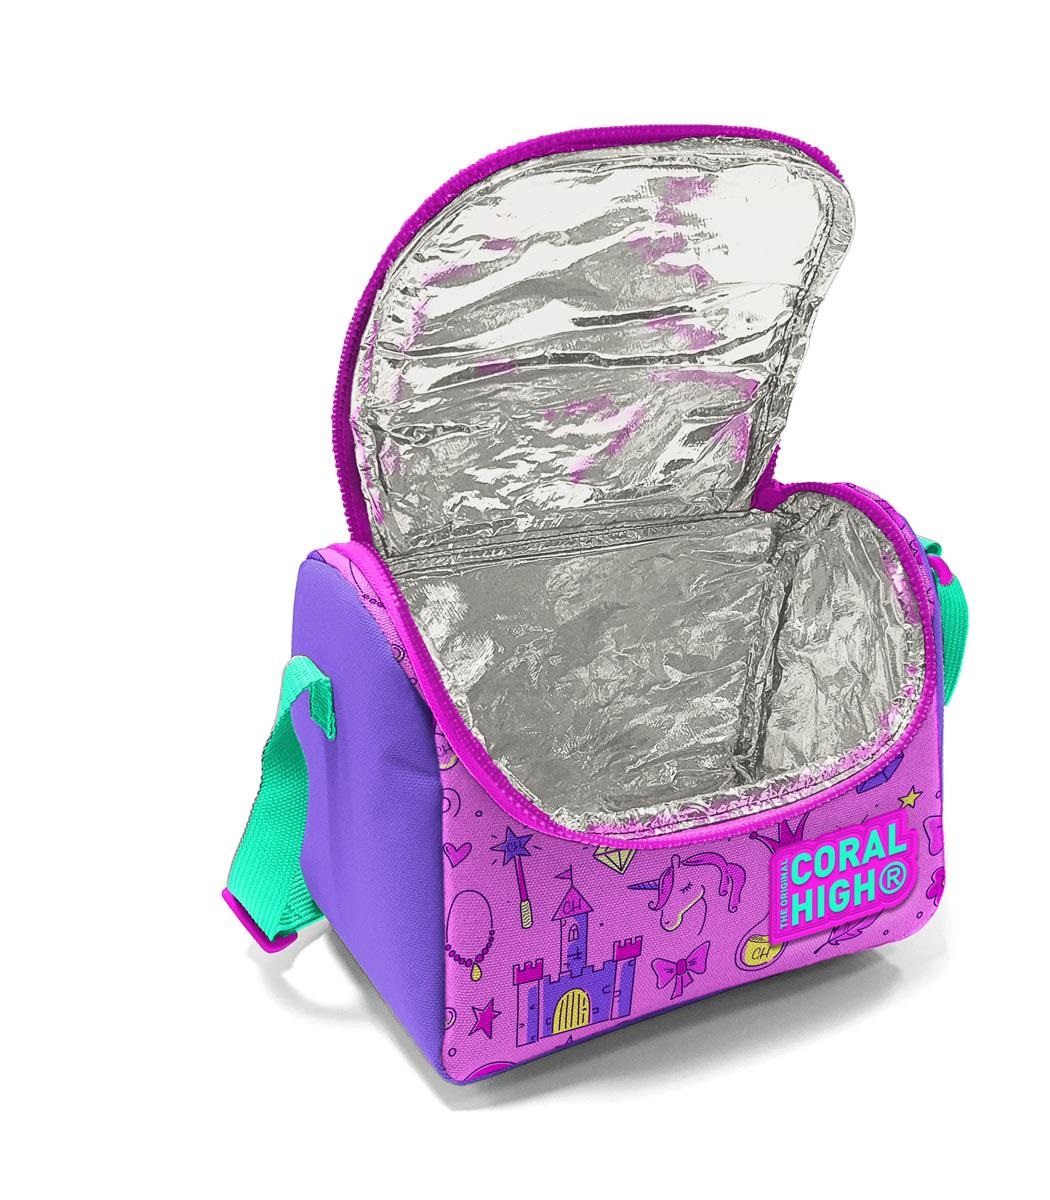 Coral High Kids Thermal Lunch Bag - Light Pink Purple Unicorn Princess Pattern